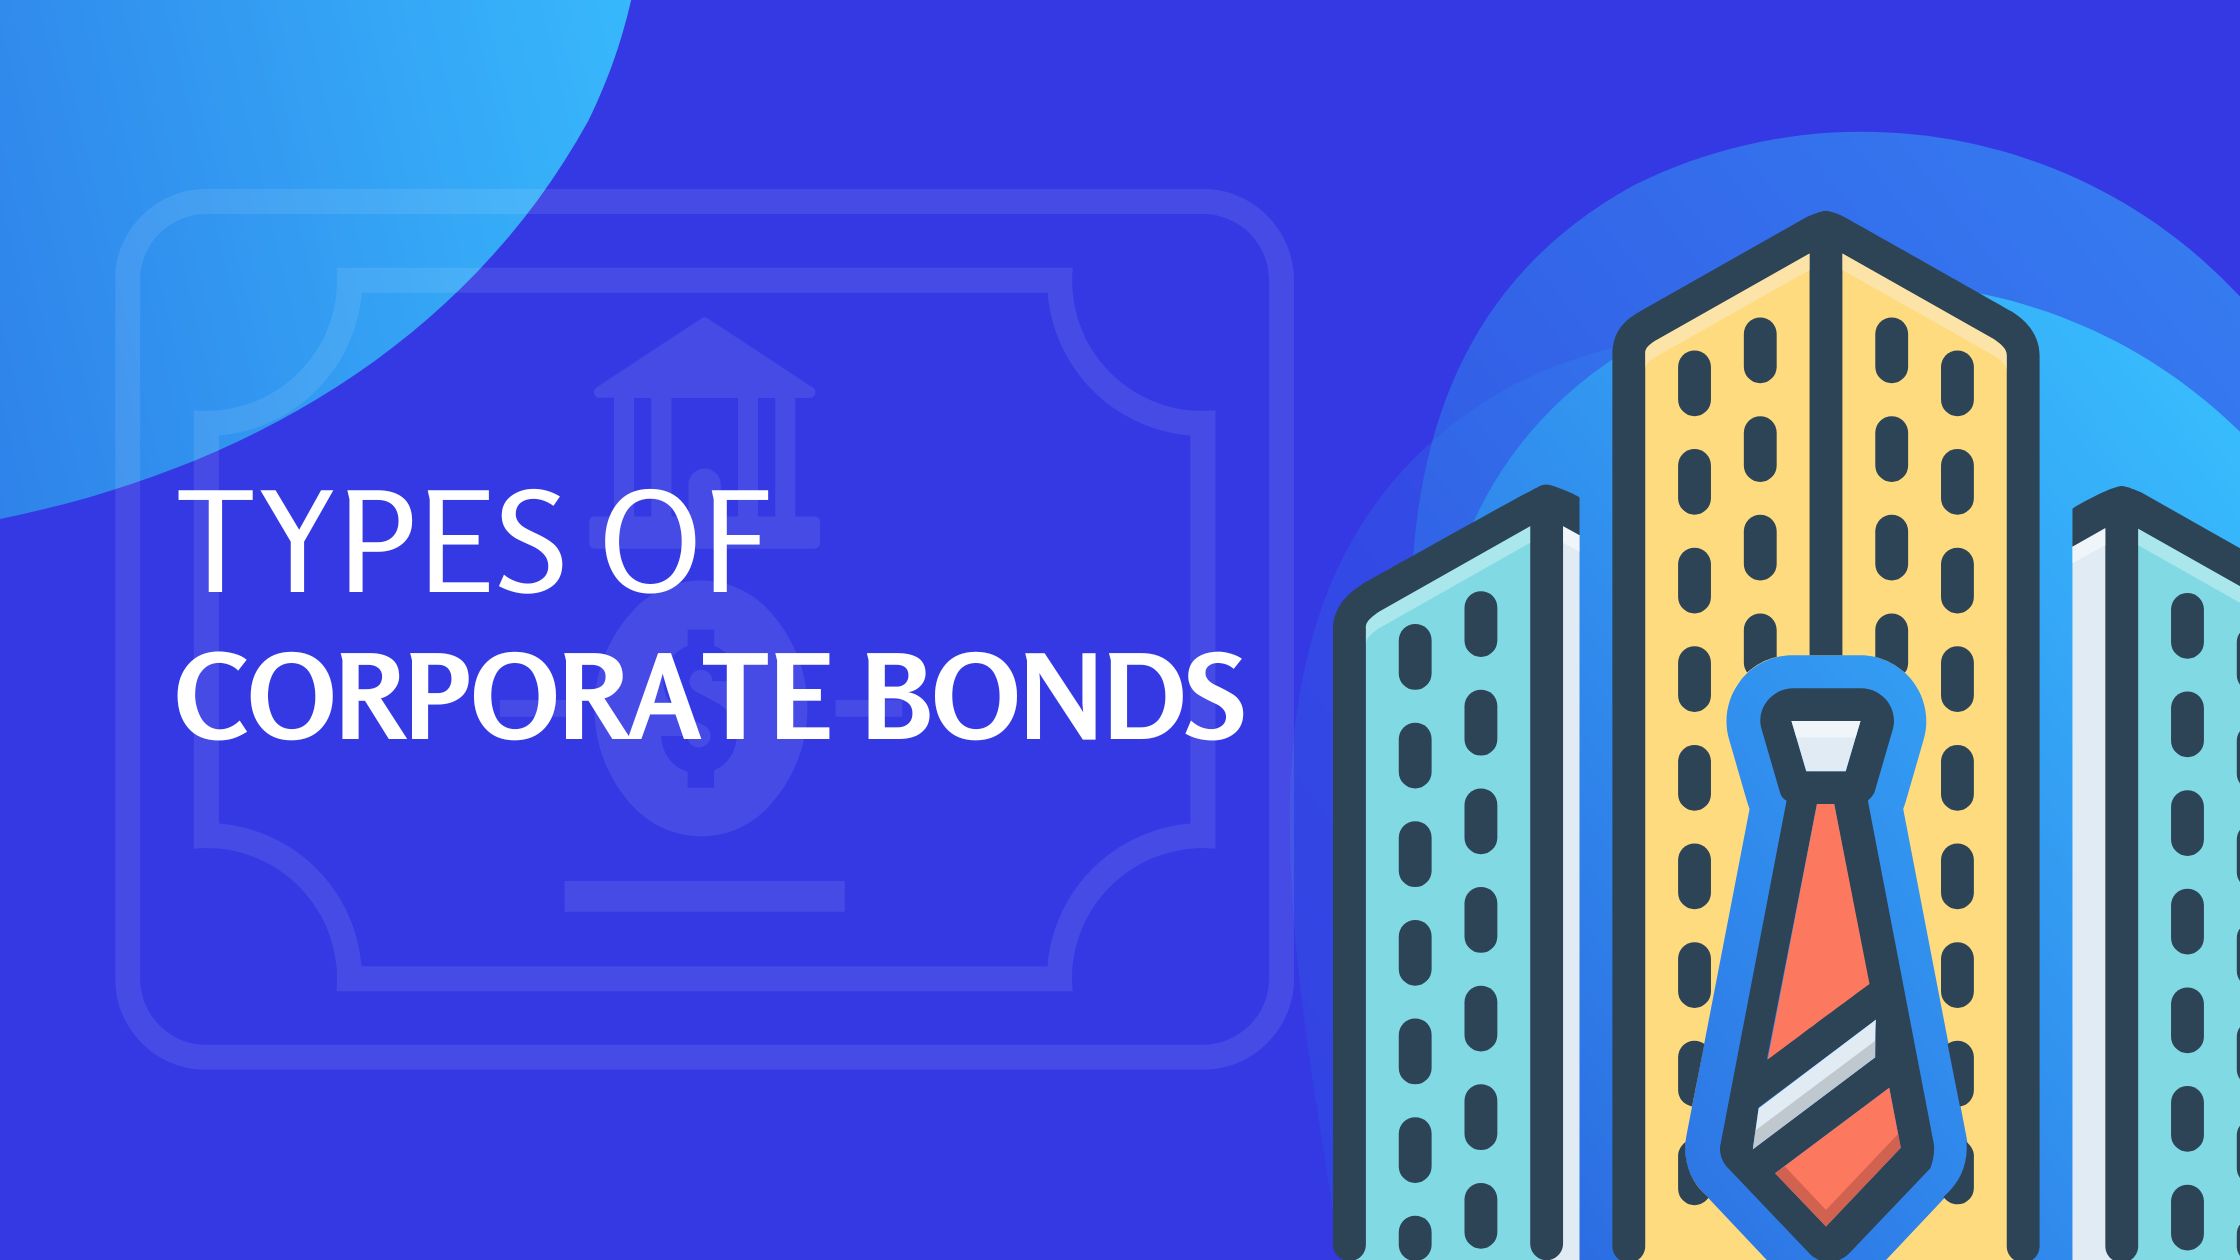 Types of corporate bonds